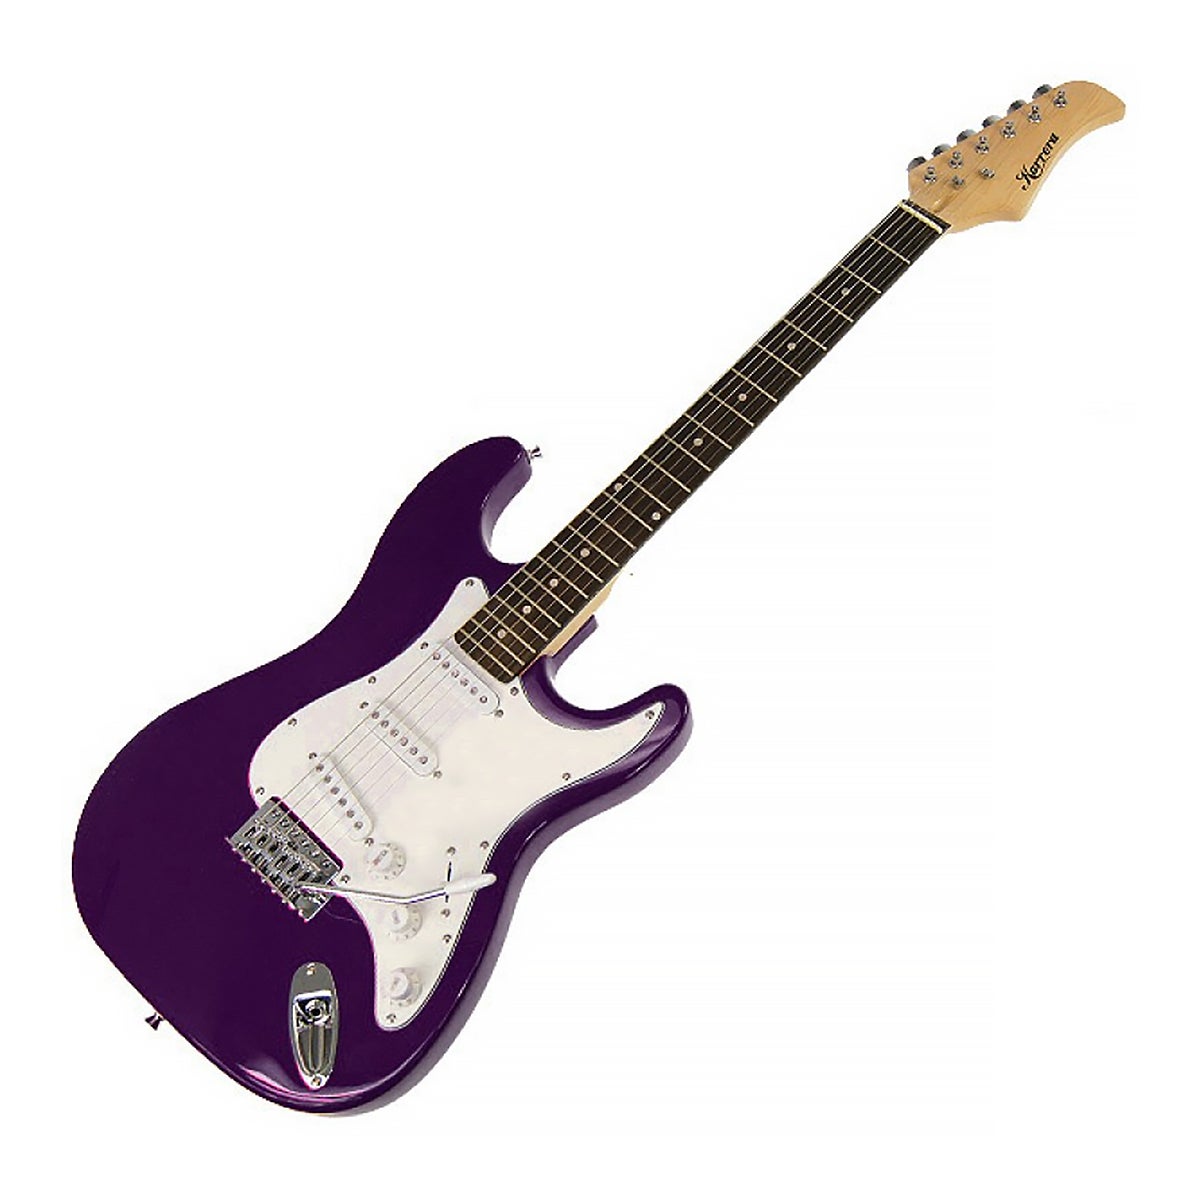 Karrera Electric Guitar Music String Instrument Purple